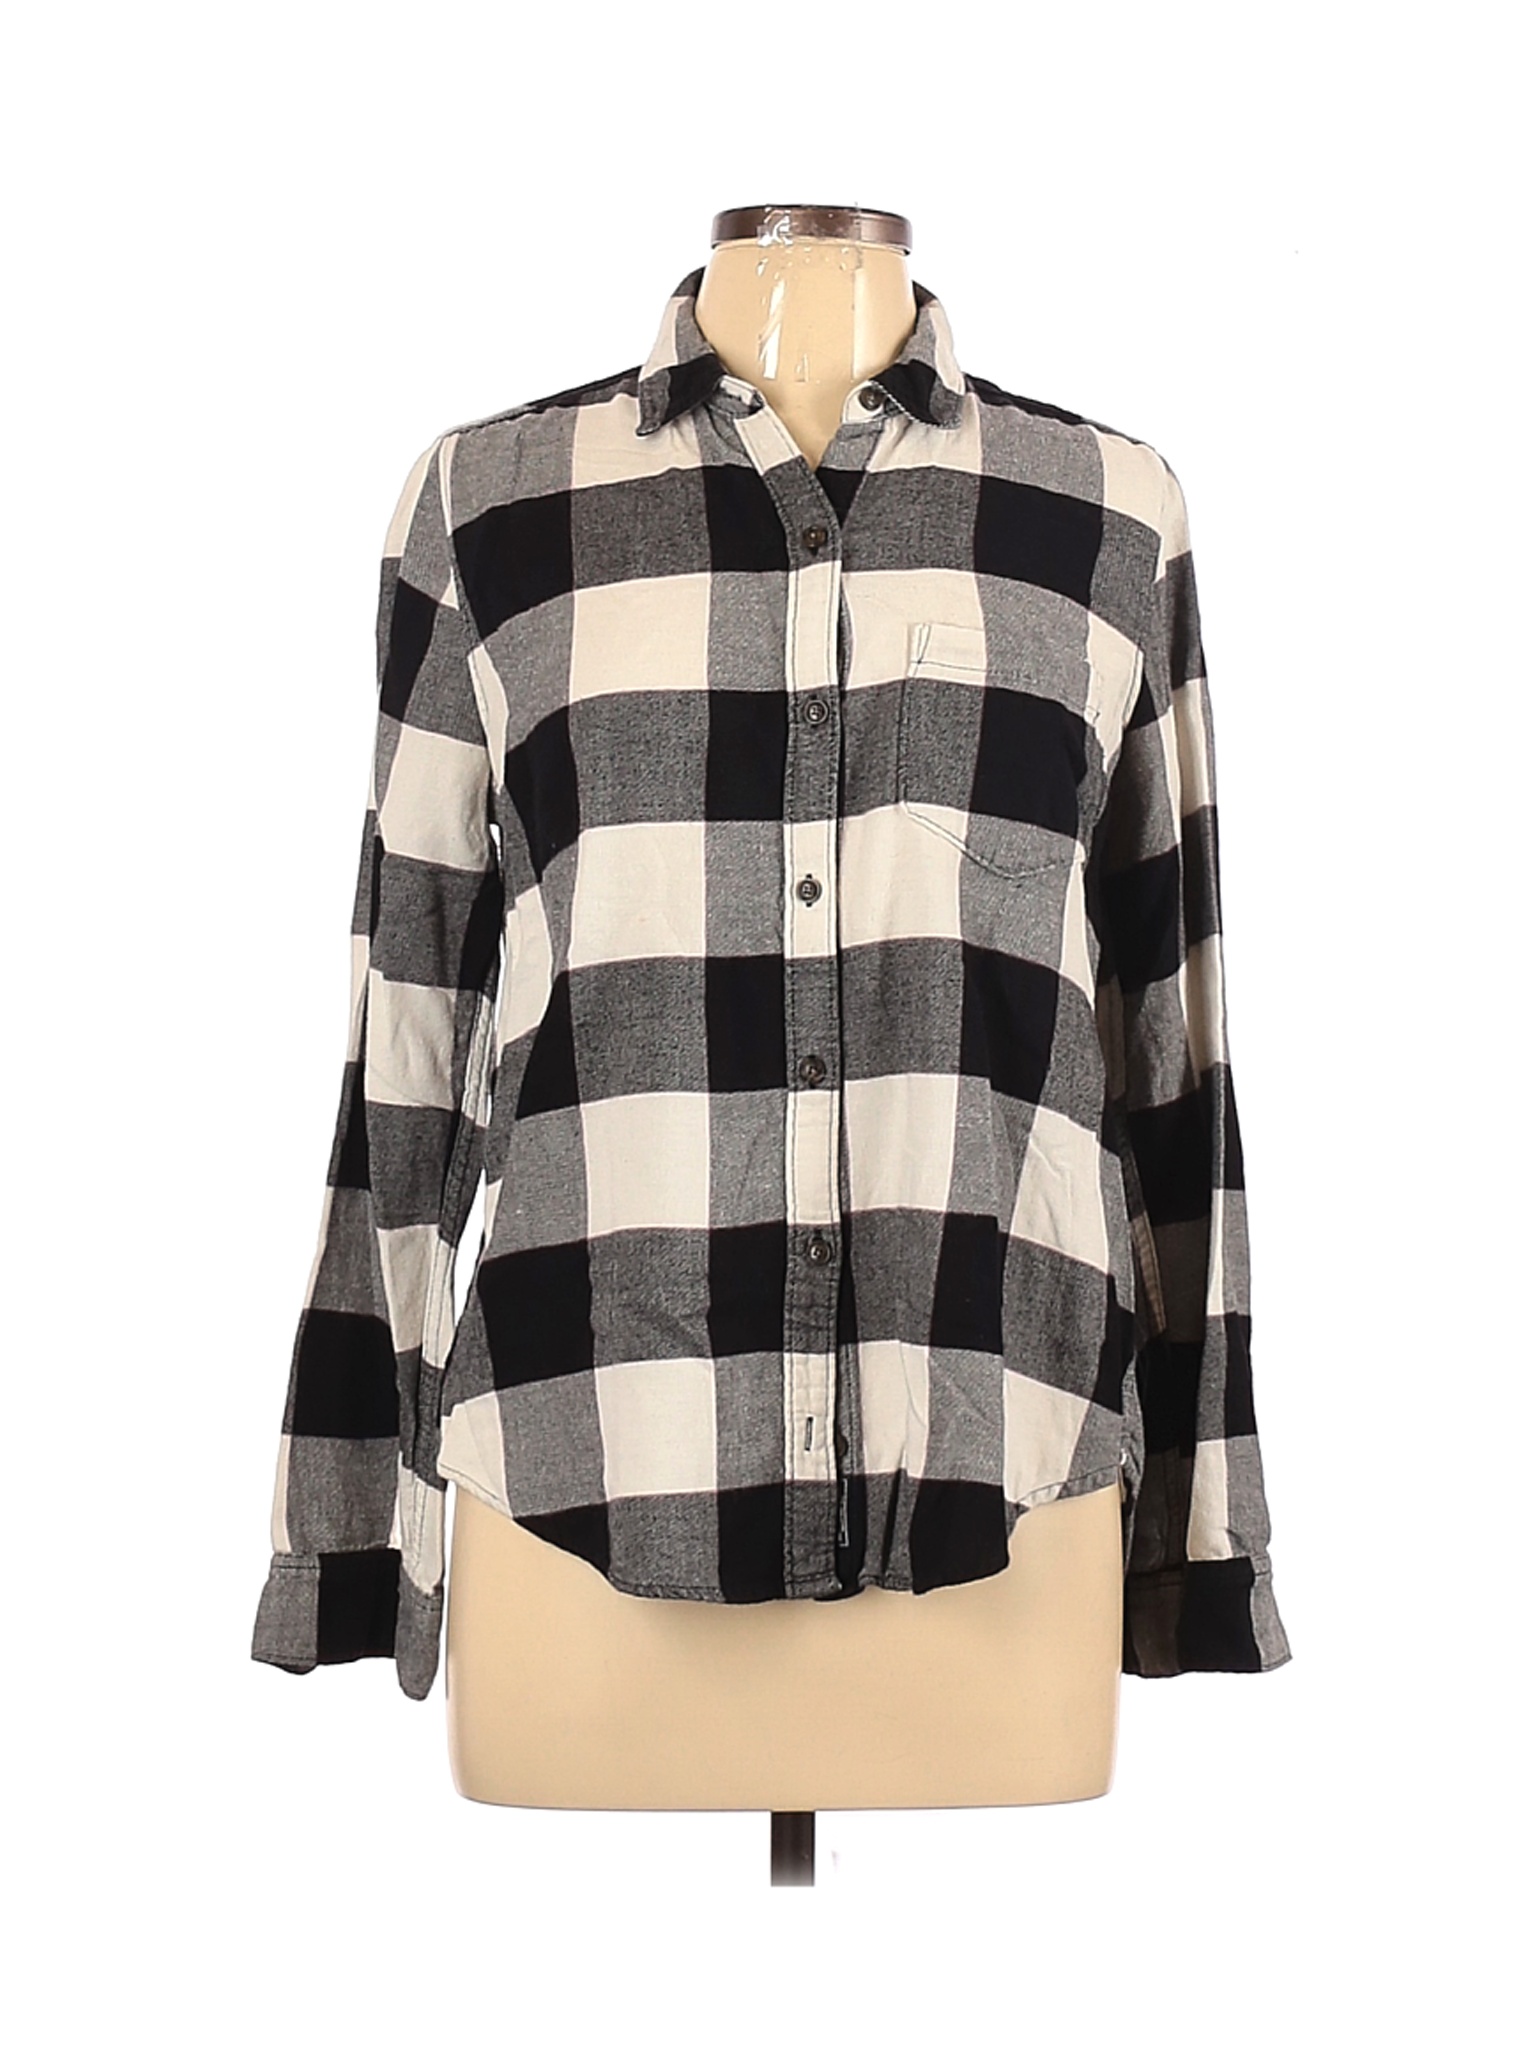 Abercrombie & Fitch Women White Long Sleeve Button-Down Shirt L | eBay